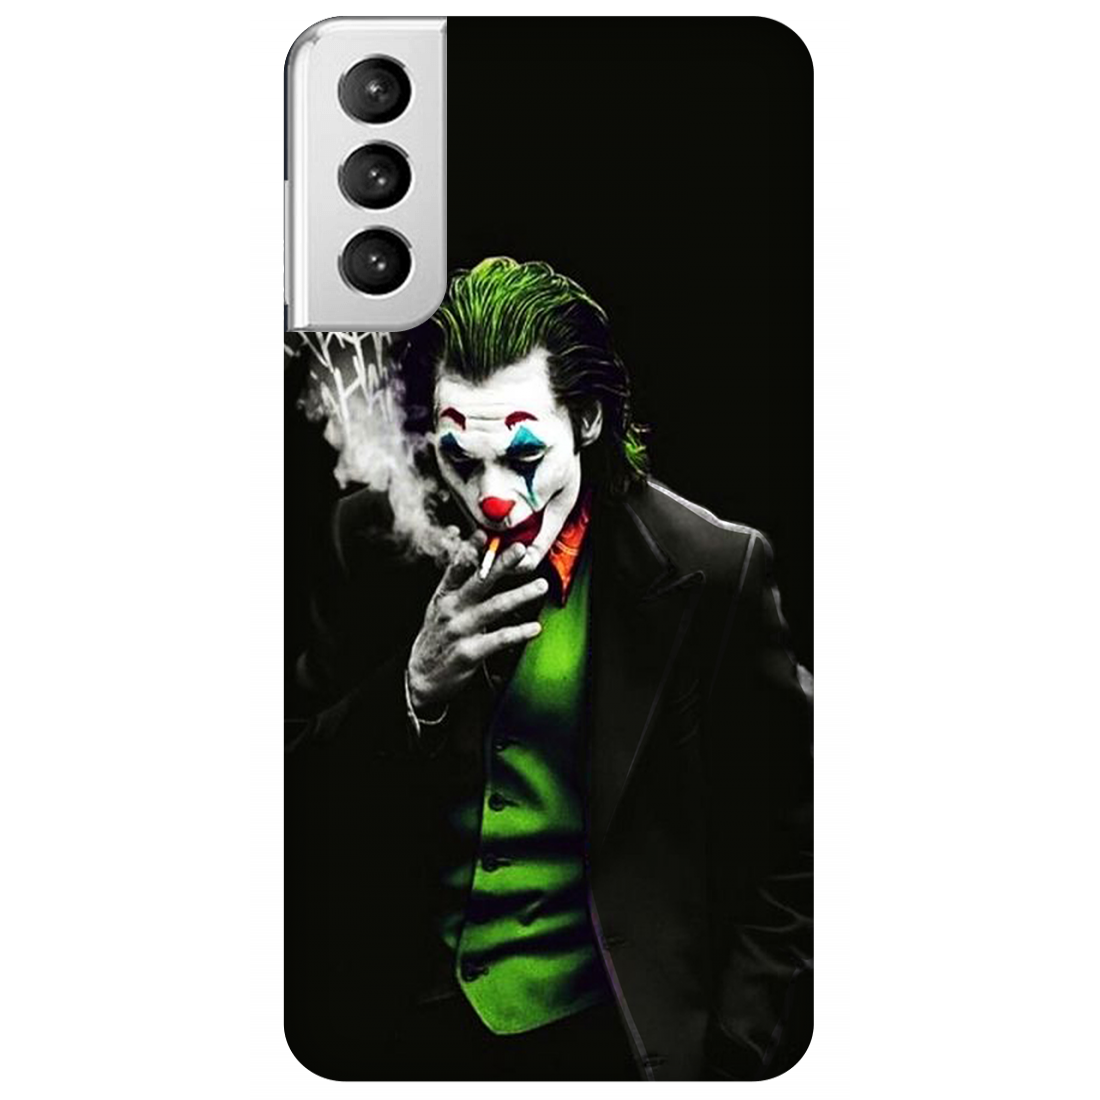 Smoking Joker Case Samsung Galaxy S21 Plus 5G